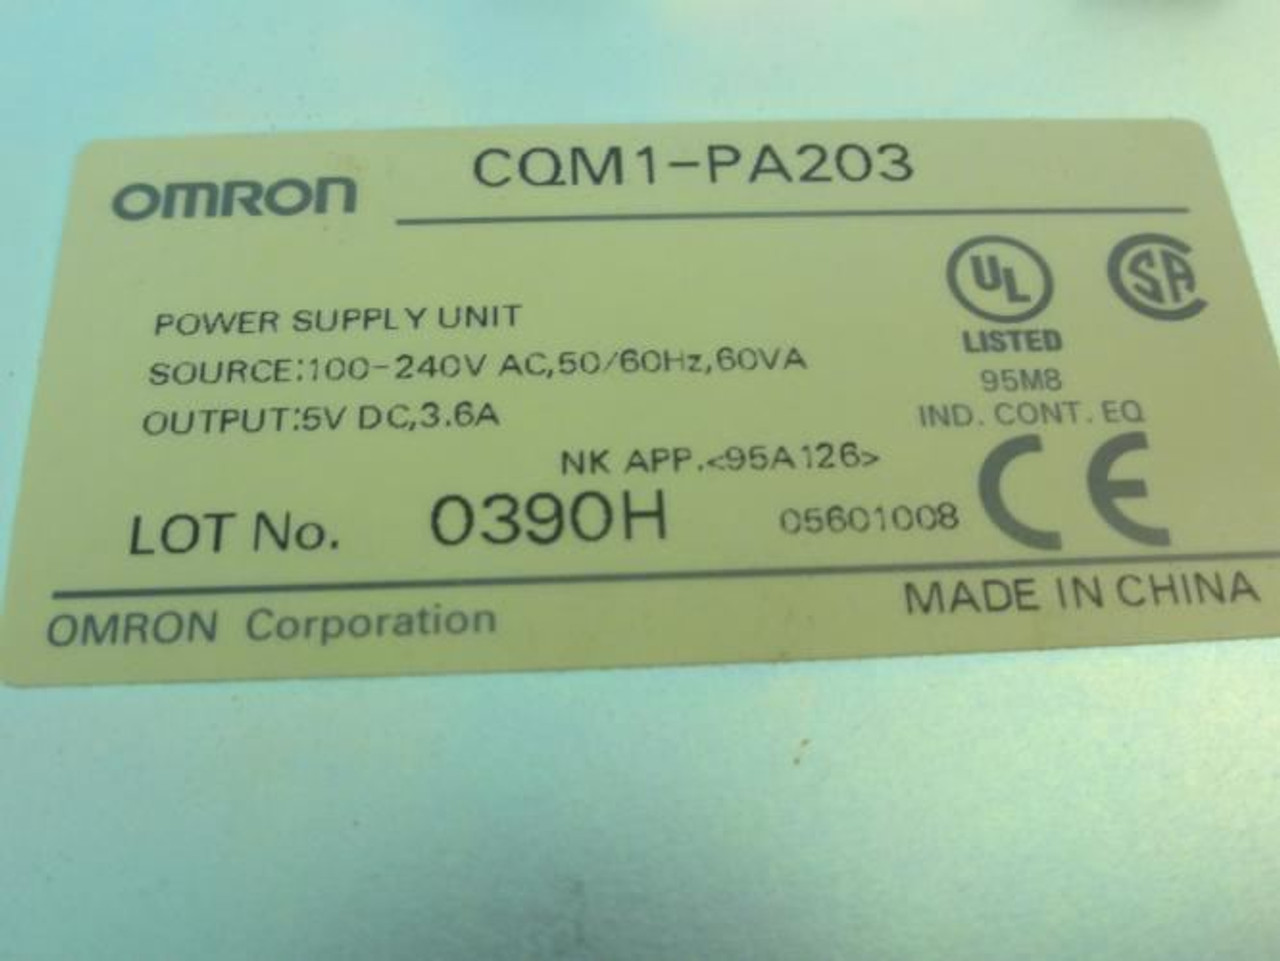 Omron CQM1-PA203; Power Supply Unit; 100-240VAC; 60VA